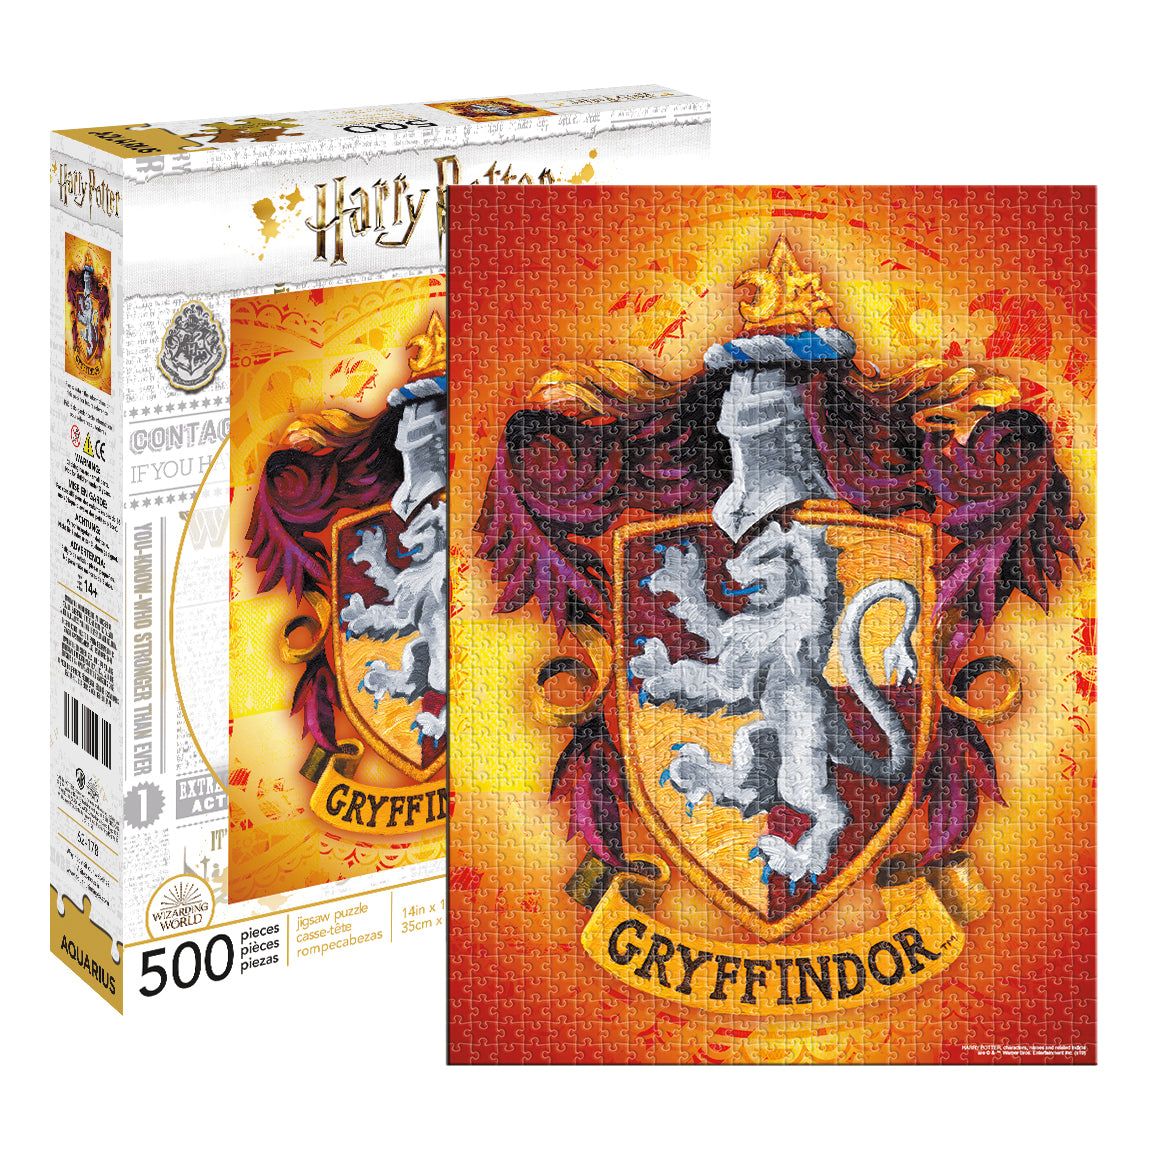 Harry Potter Gryffindor Crest Jigsaw Puzzle 500 pieces